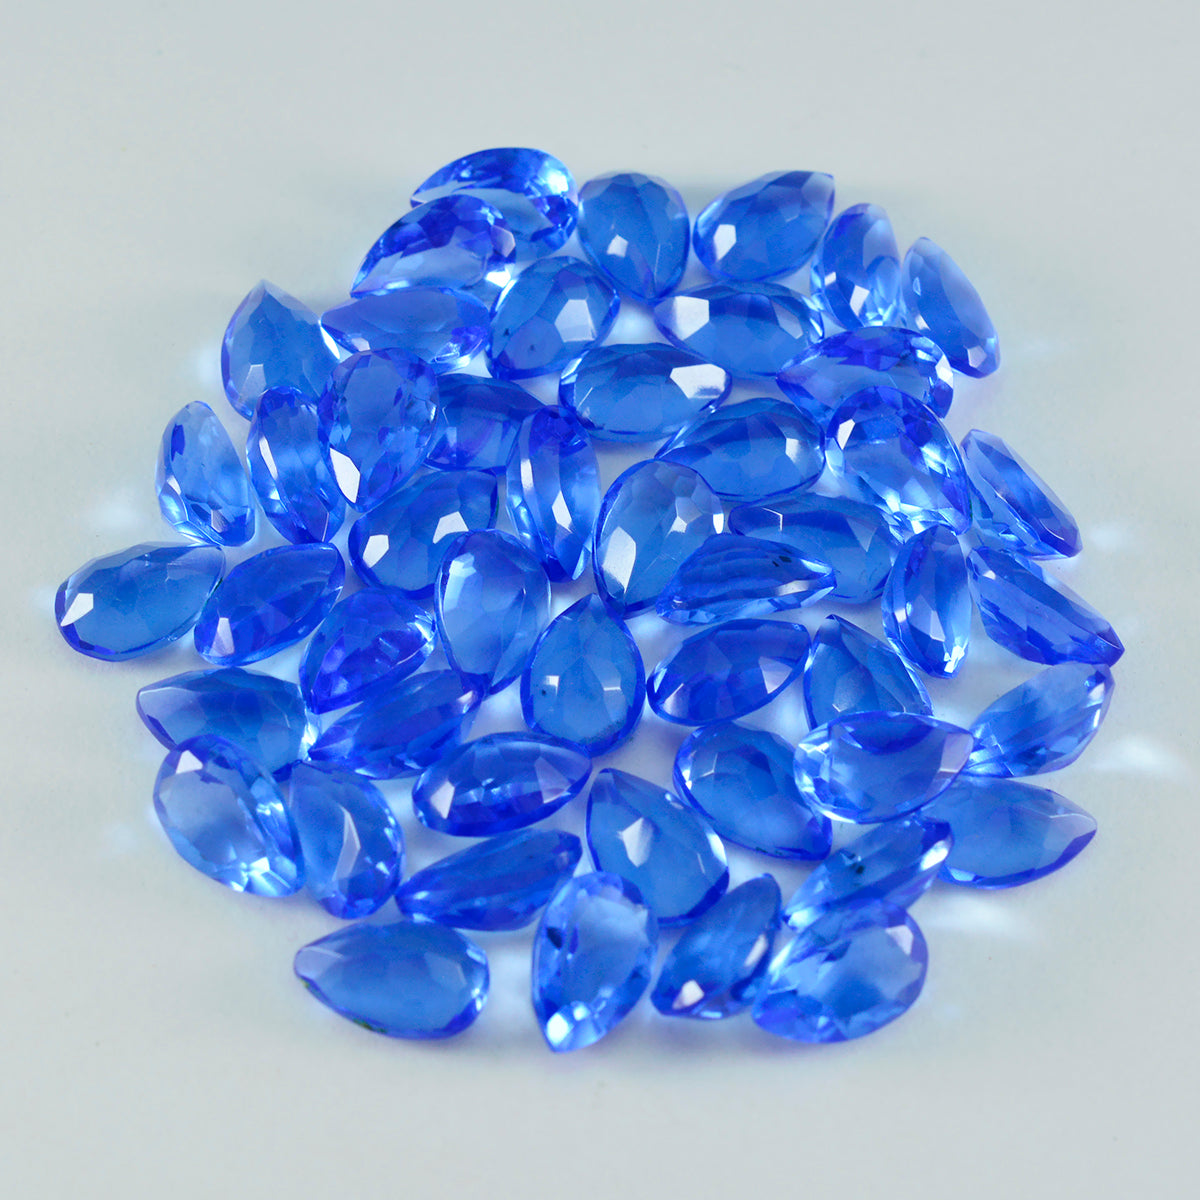 Riyogems 1PC Blue Sapphire CZ Faceted 4x6 mm Pear Shape good-looking Quality Gem